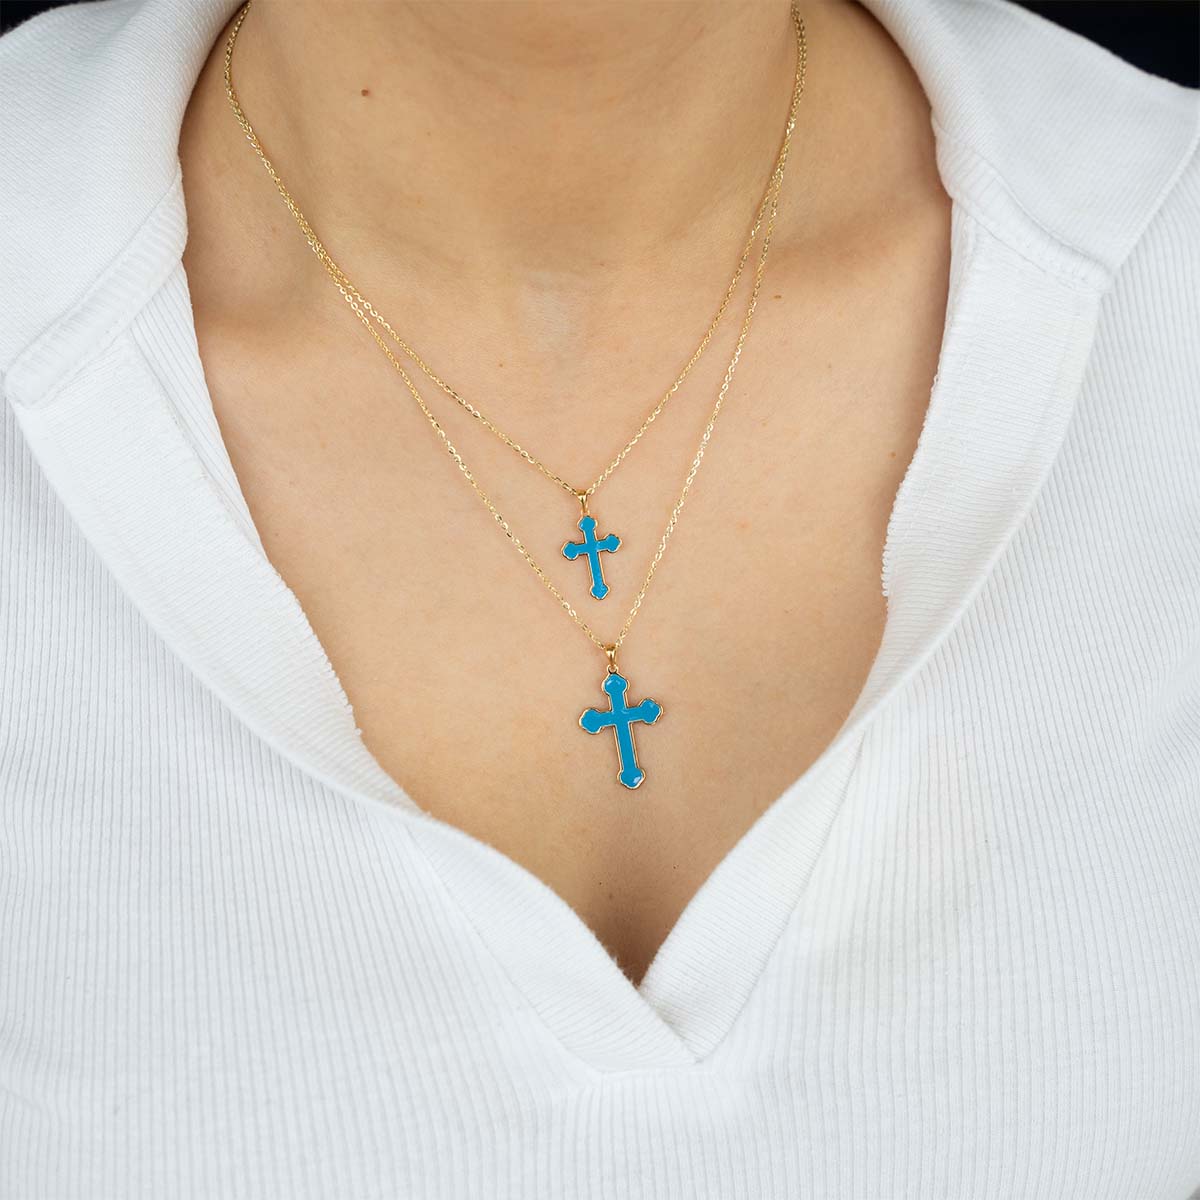 Greek Orthodox Cross Necklace with Turquoise Enamel